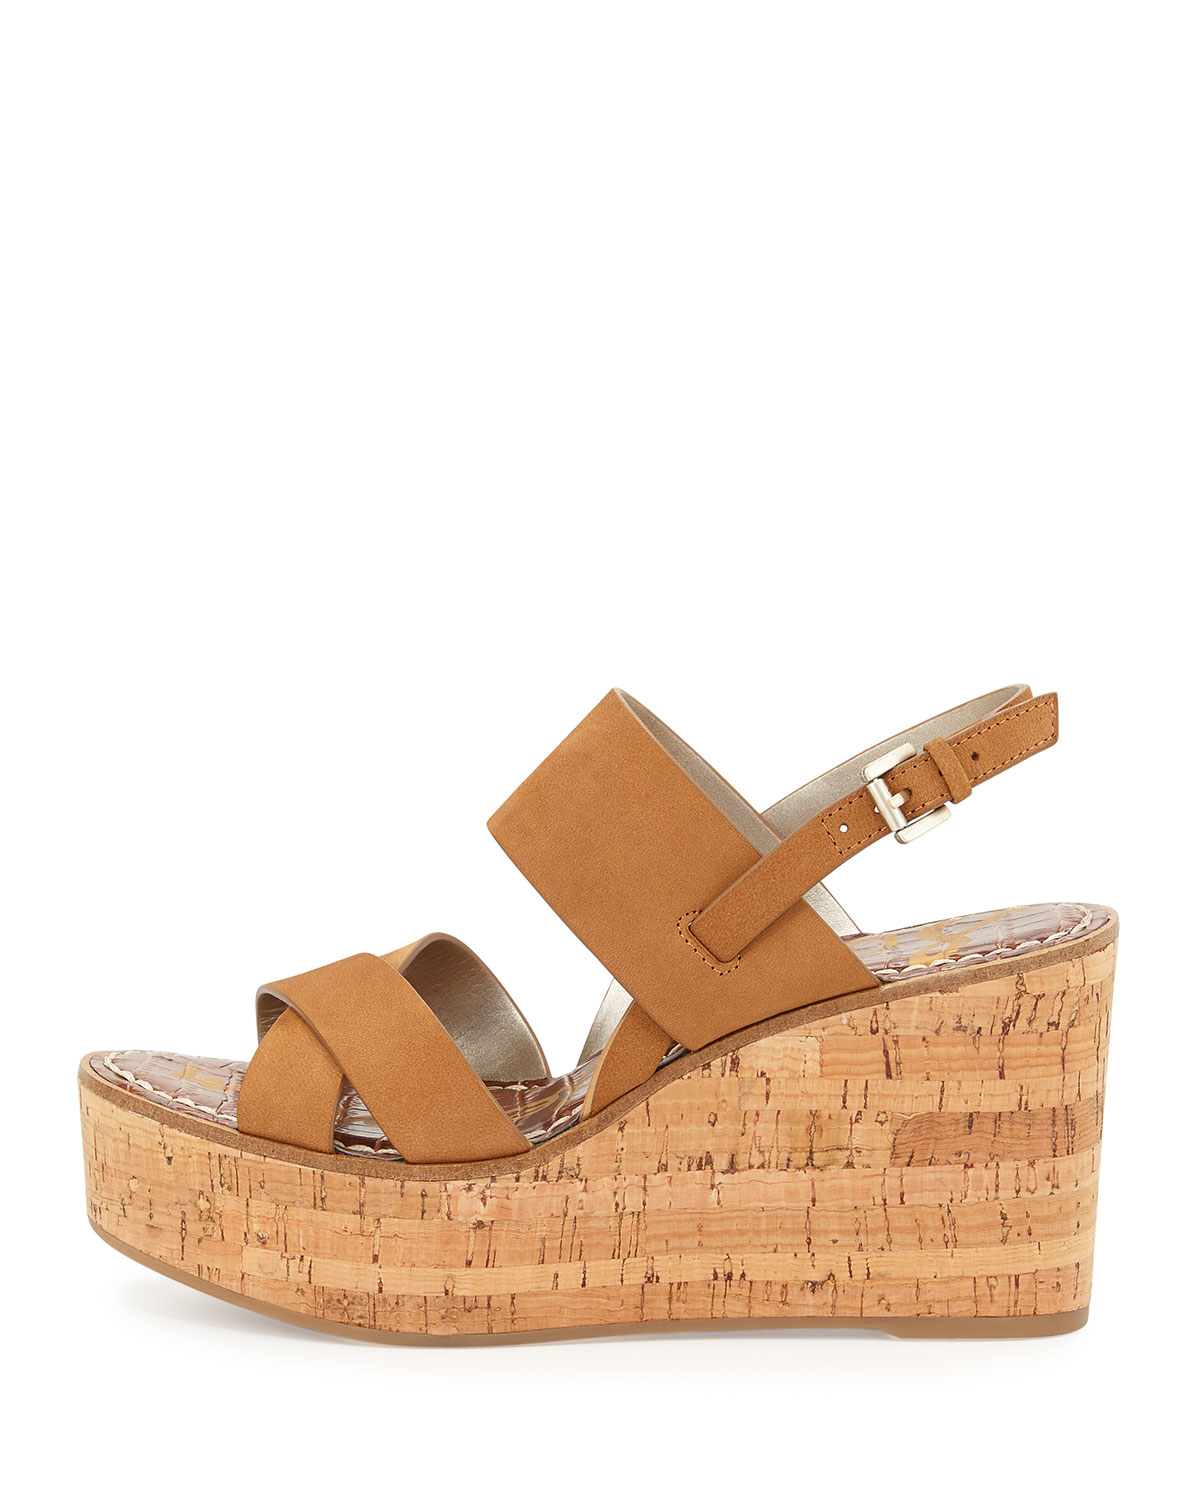 Sam edelman Destiny Leather Cork-wedge Sandal in Brown (CAMEL) | Lyst